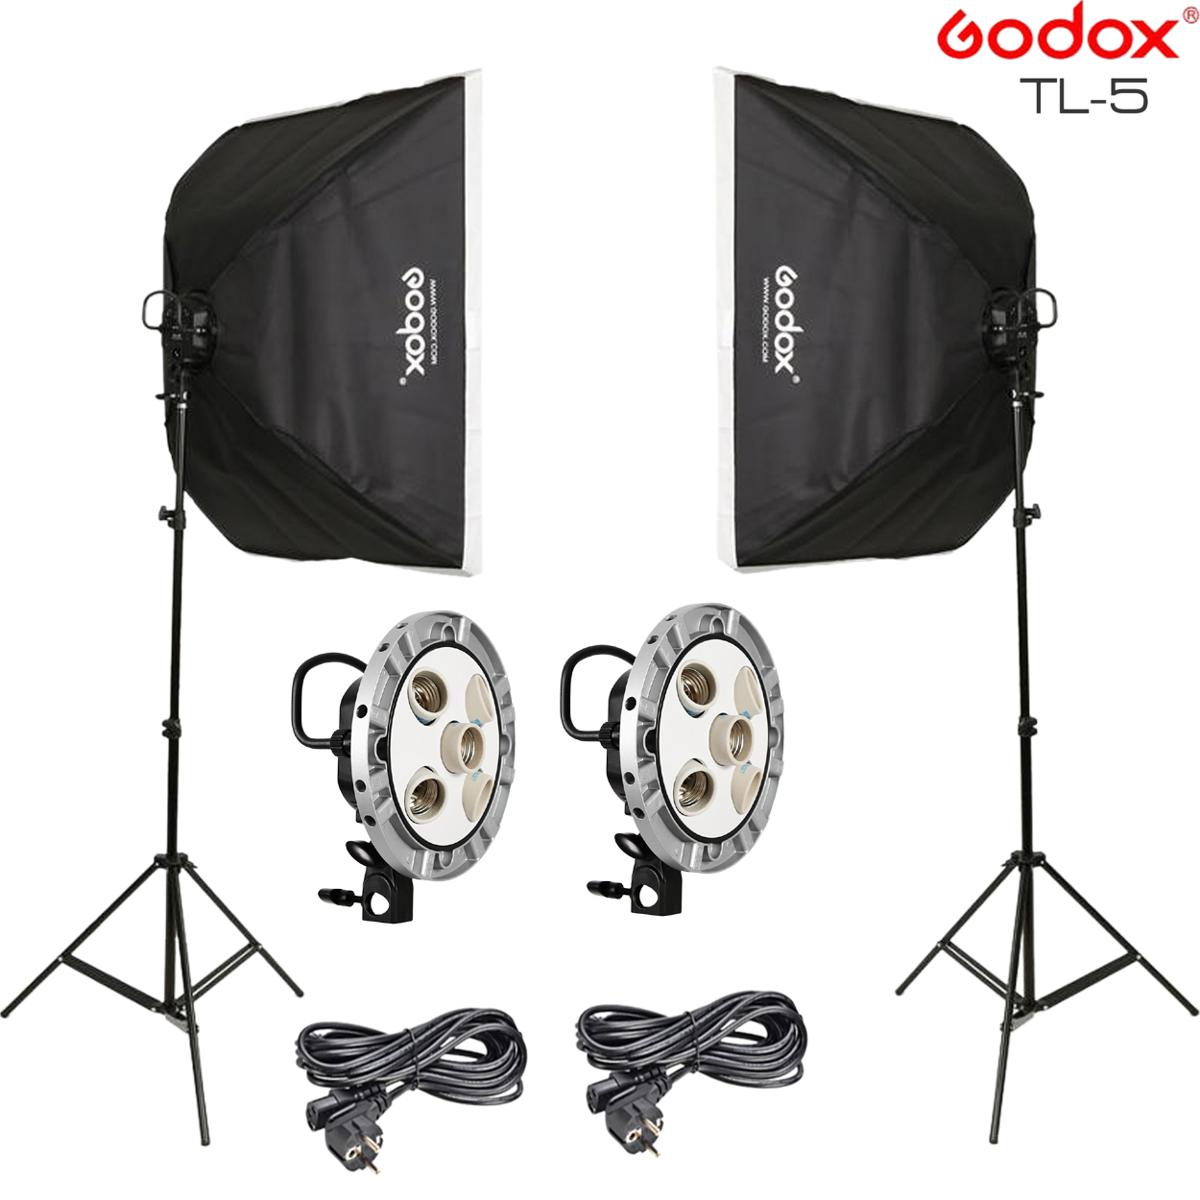 The Godox TL-5 5in1 Bulb Head Multi-Holder Tricolor+Light Stand+softbox 60*60cm Camera Photography Lighting 2pcs Set